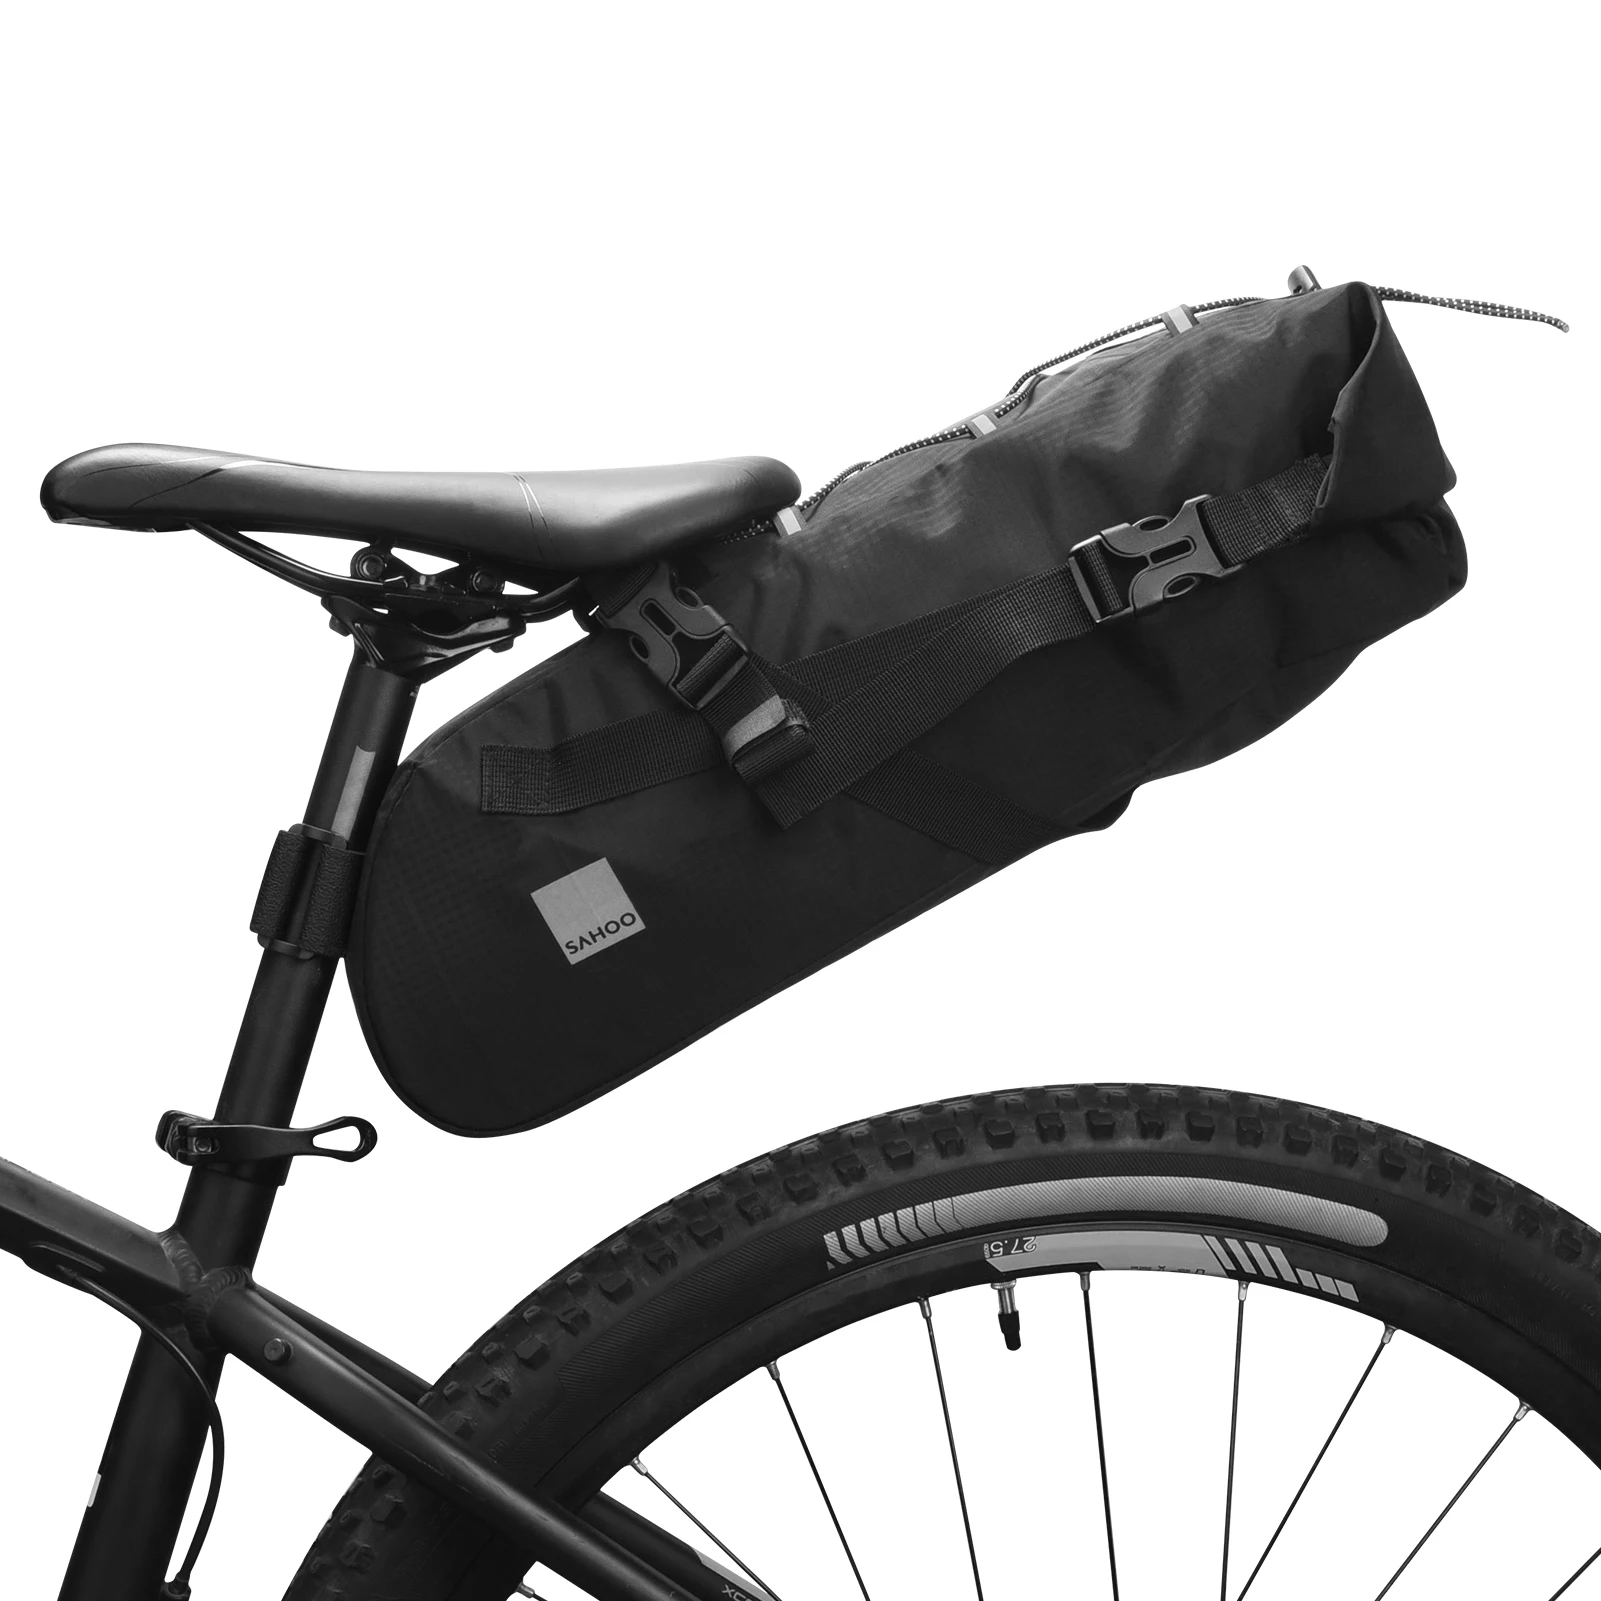 SAHOO-Bike-Bag-Waterproof-Reflective-11L-Large-Capacity-Saddle-Bag ...